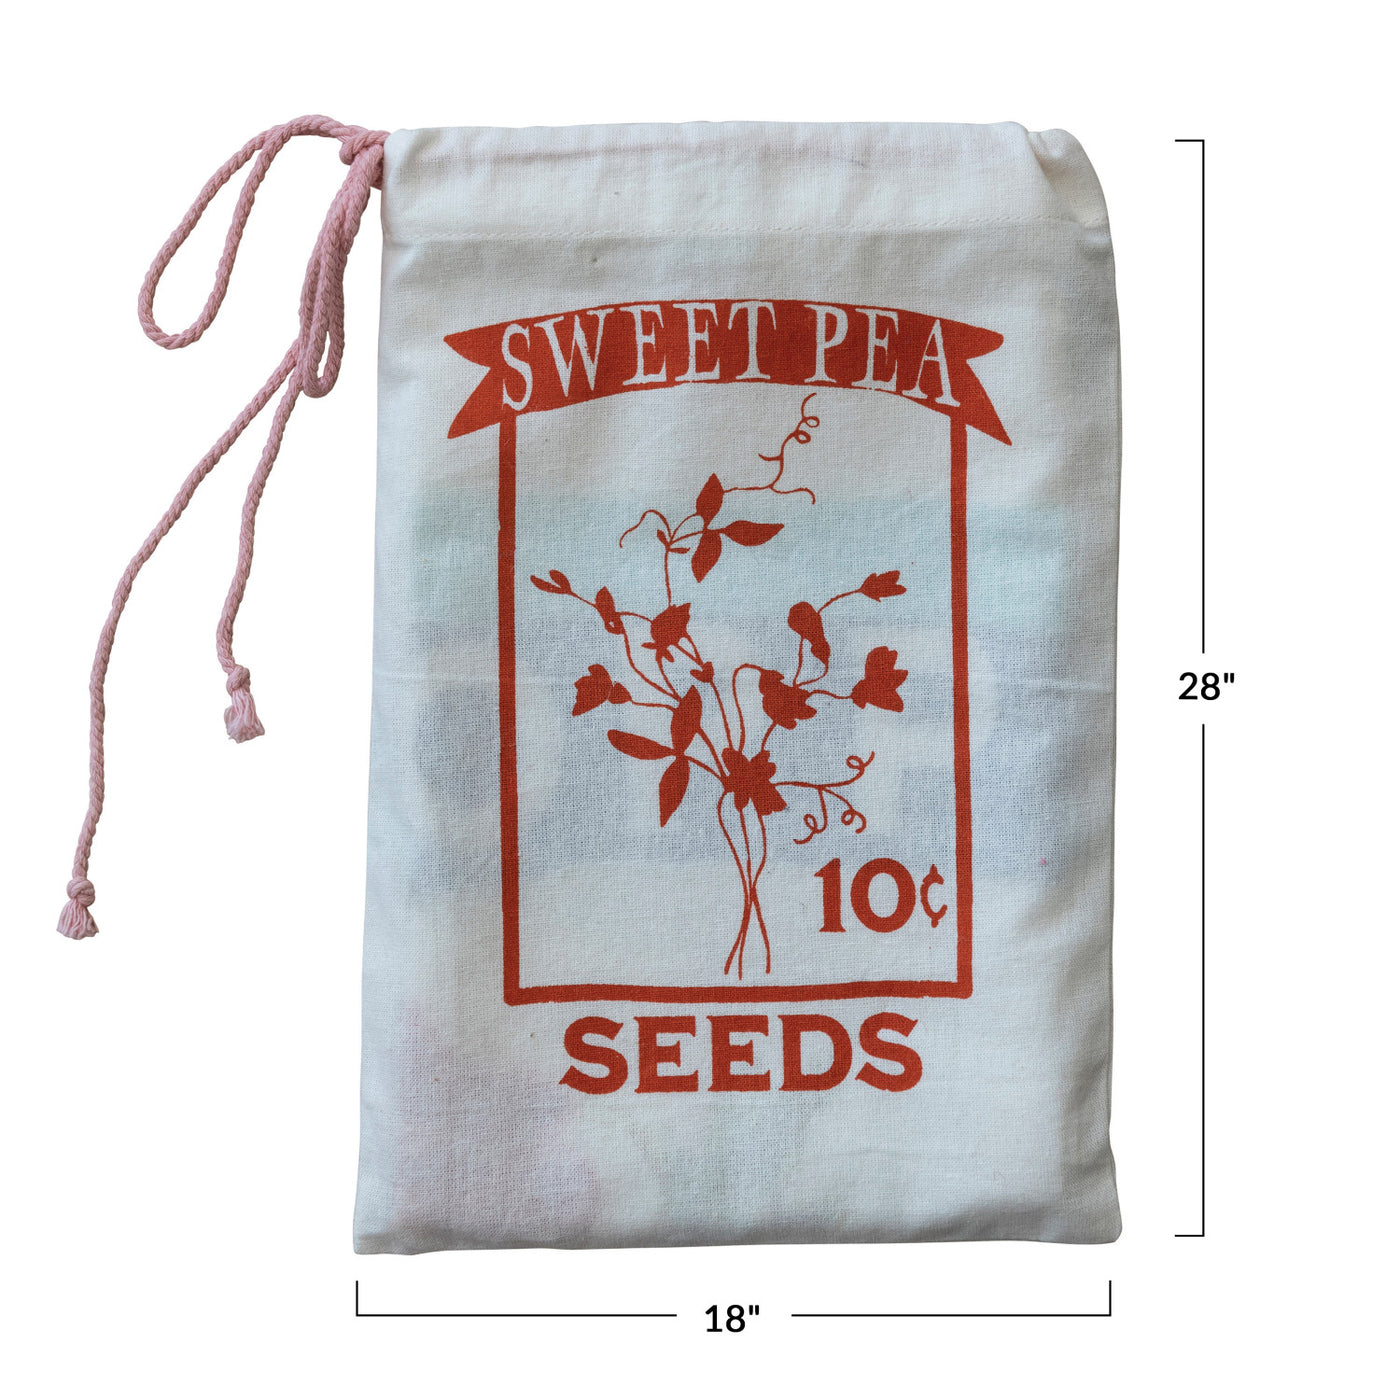 Seeds Cotton Printed Tea Towels